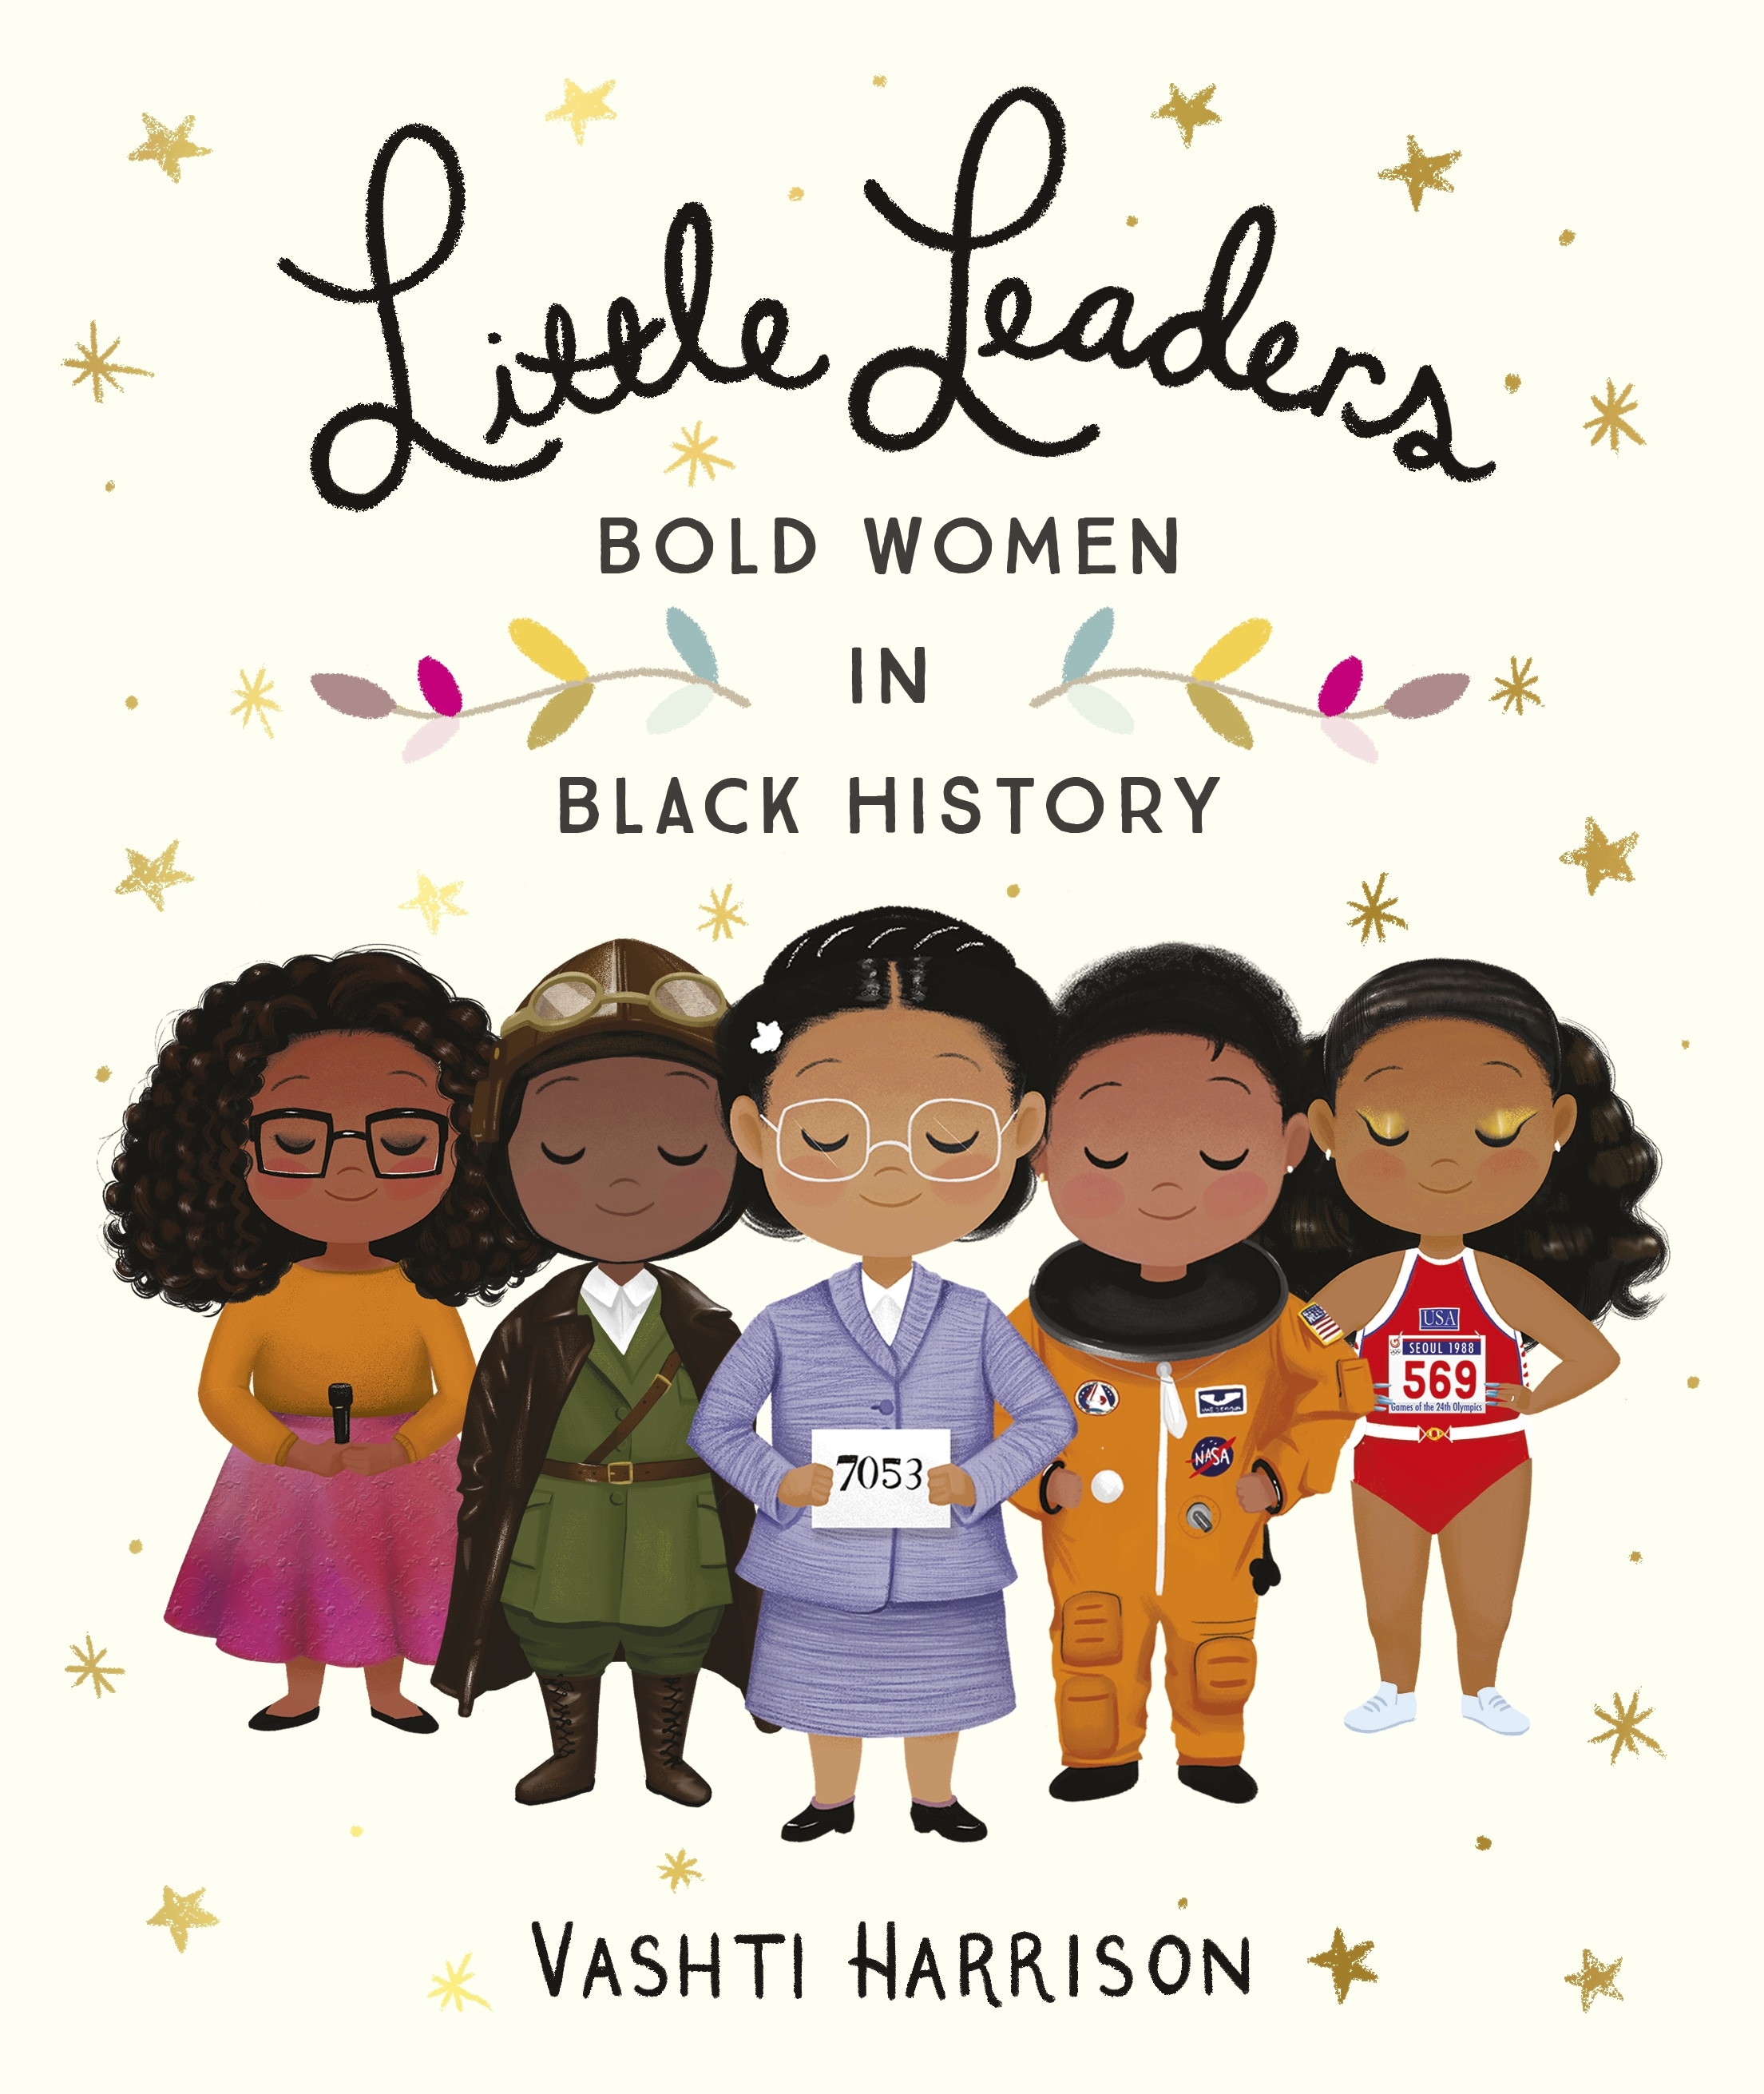 Book “Little Leaders: Bold Women in Black History” by Vashti Harrison — January 31, 2019